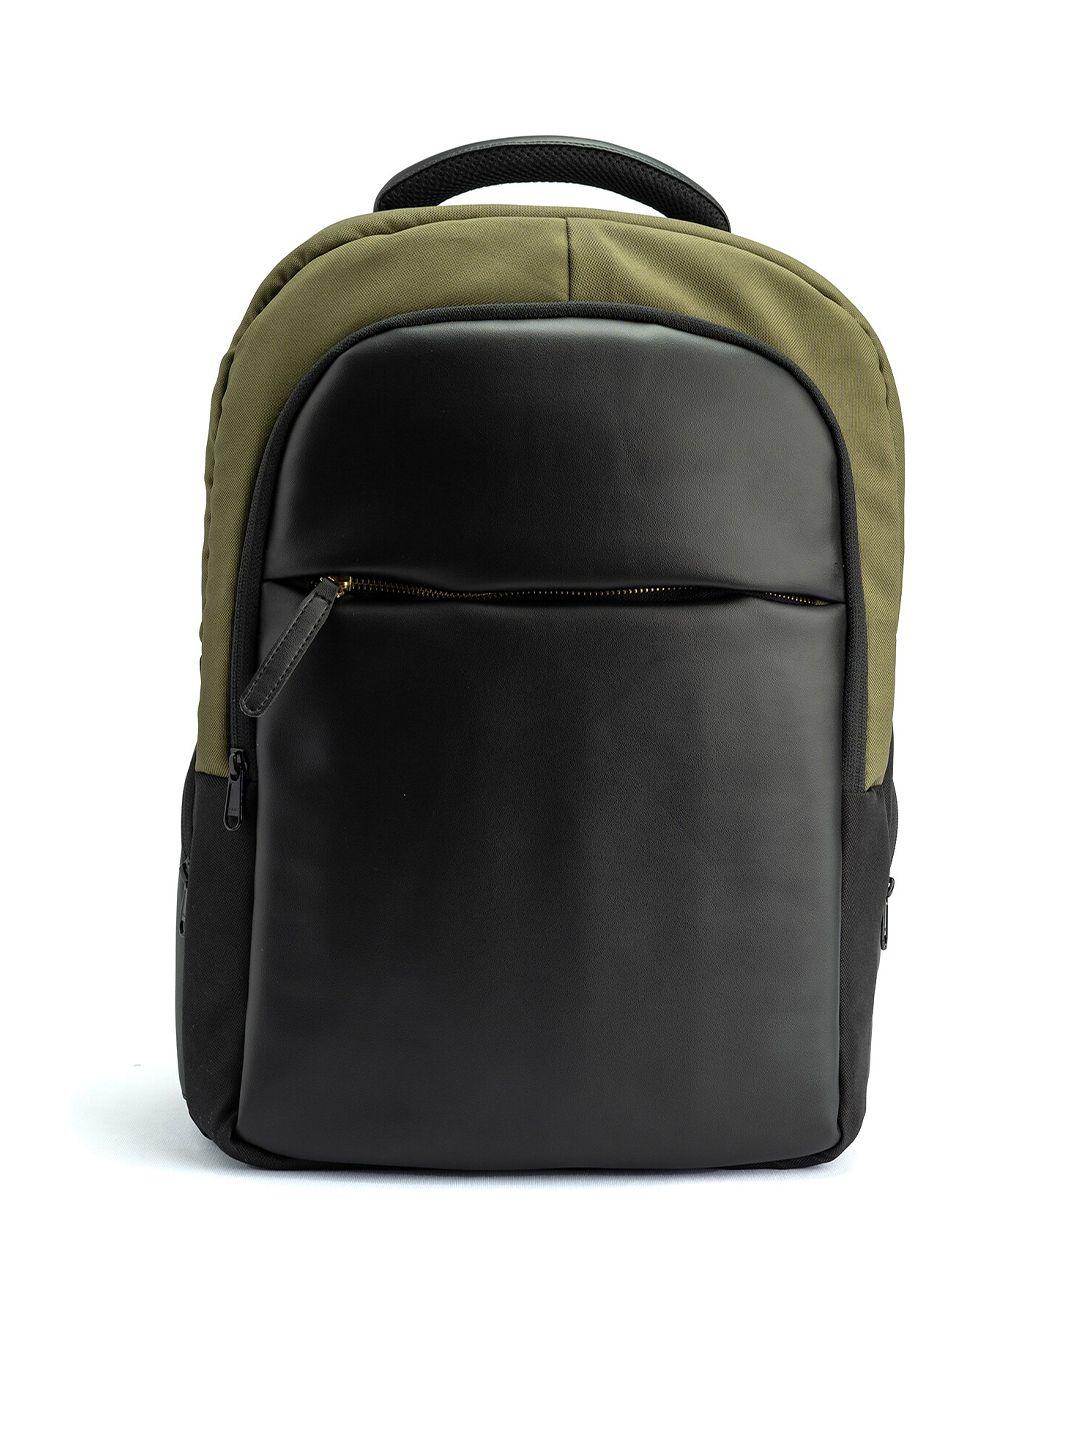 rashki unisex green & black colourblocked backpack with usb charging port